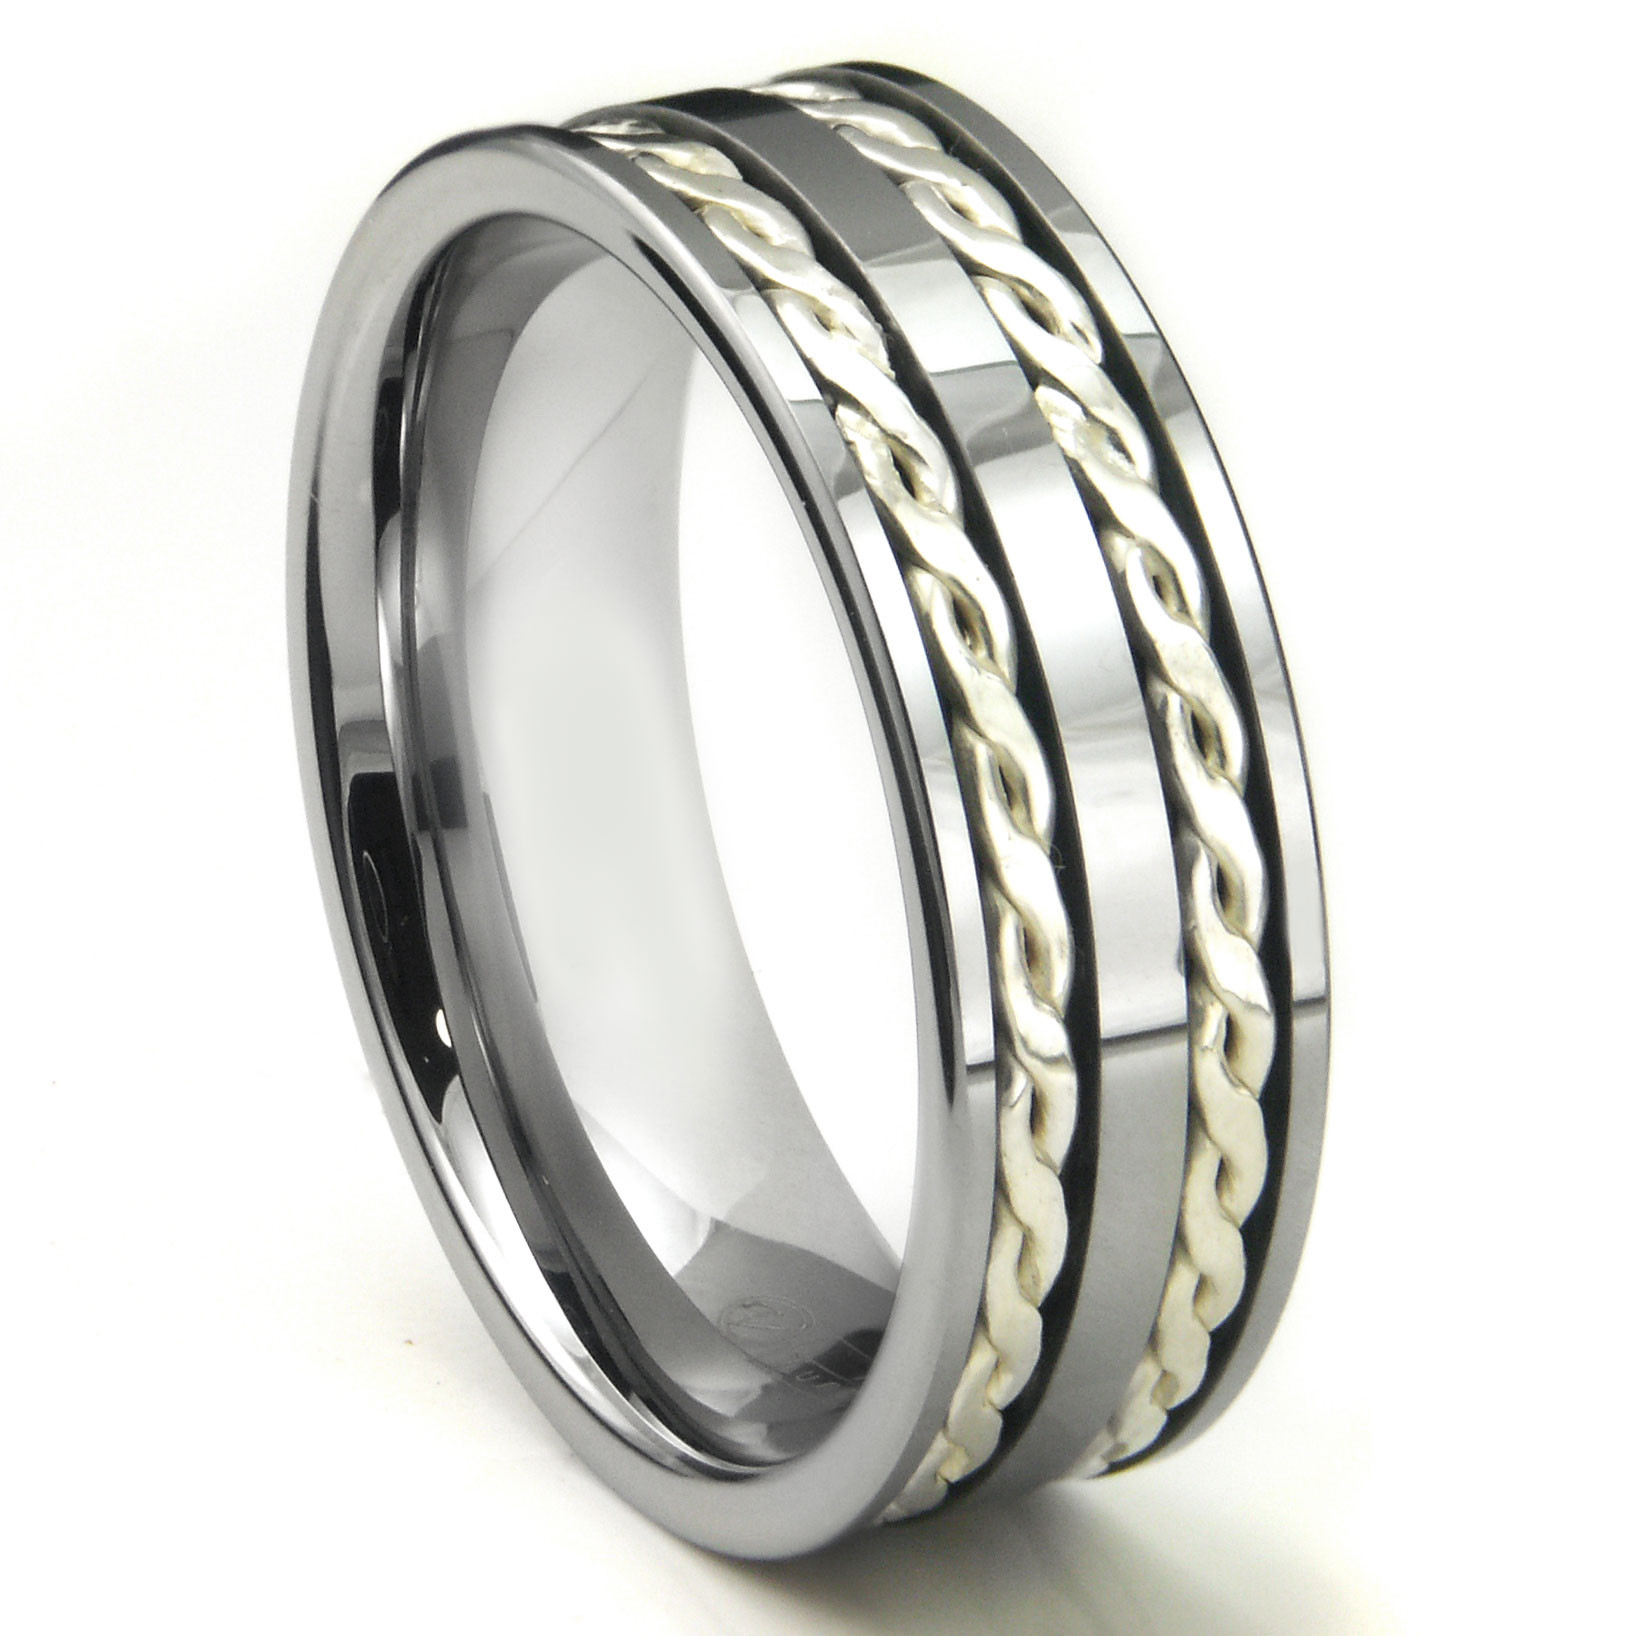 Tungsten Carbide Wedding Bands
 Tungsten Carbide Silver Rope Wedding Band Ring